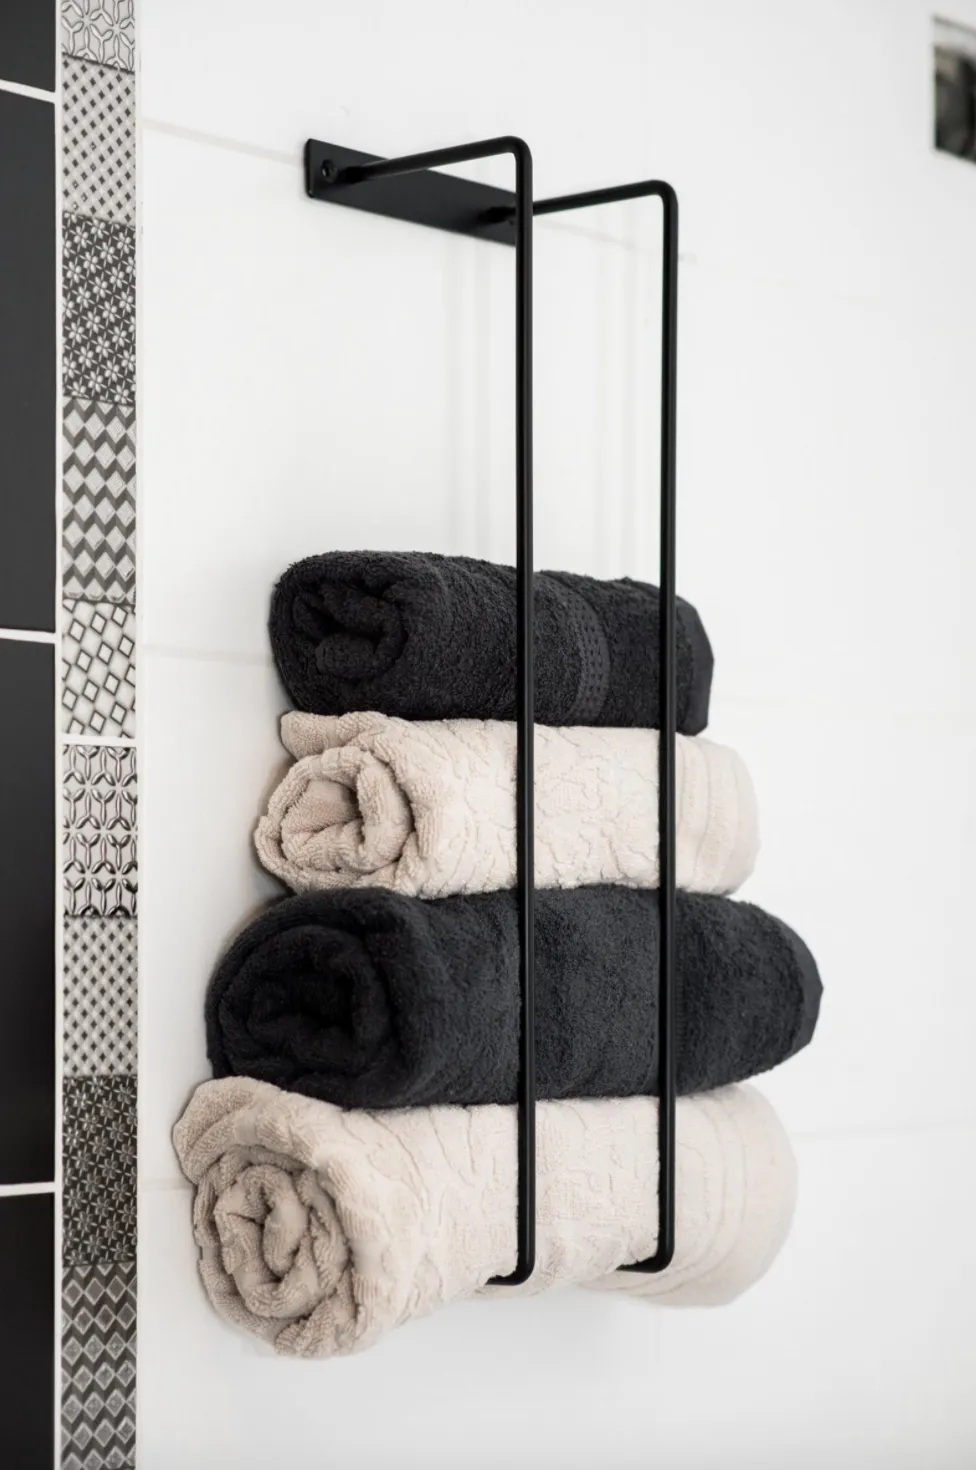 Towel storage ideas - vertical towel rails